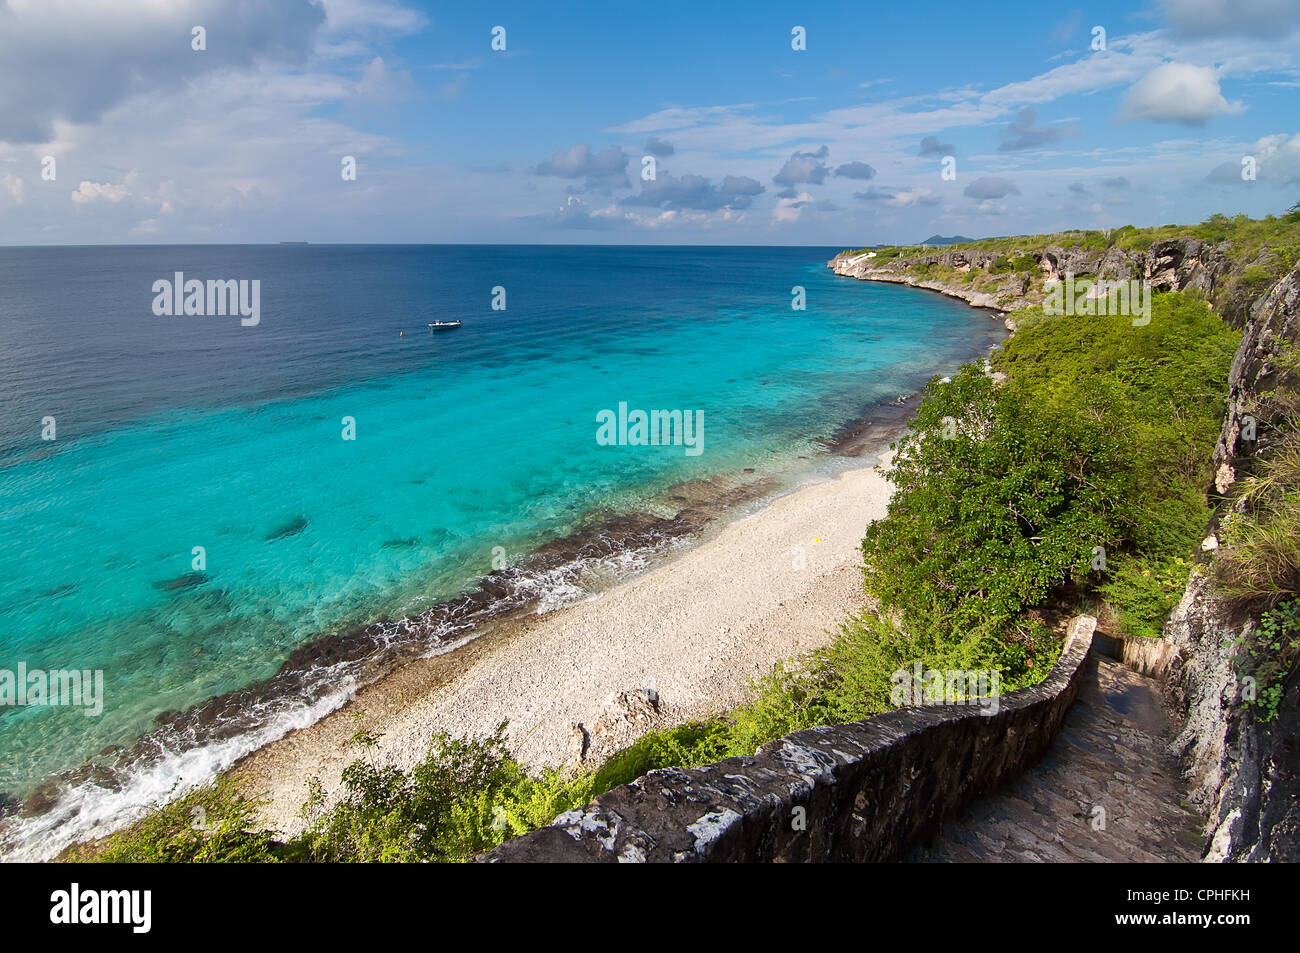 A landmark location on Bonaire, Dutch Сaribbean Island. Stock Photo